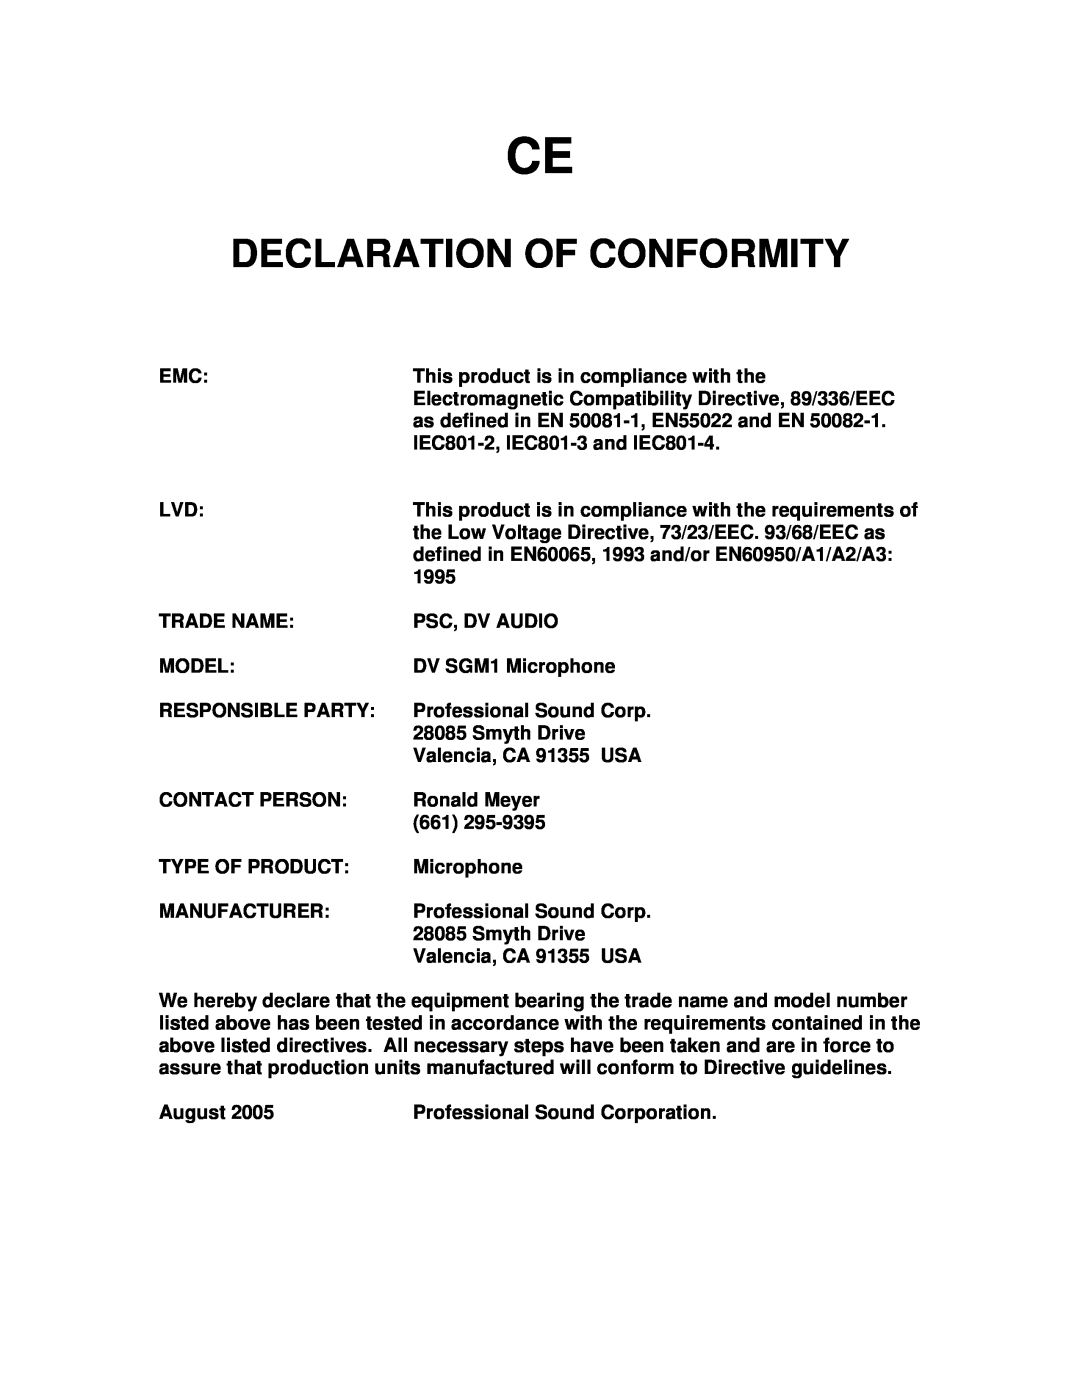 PSC SGM1 manual Declaration Of Conformity 